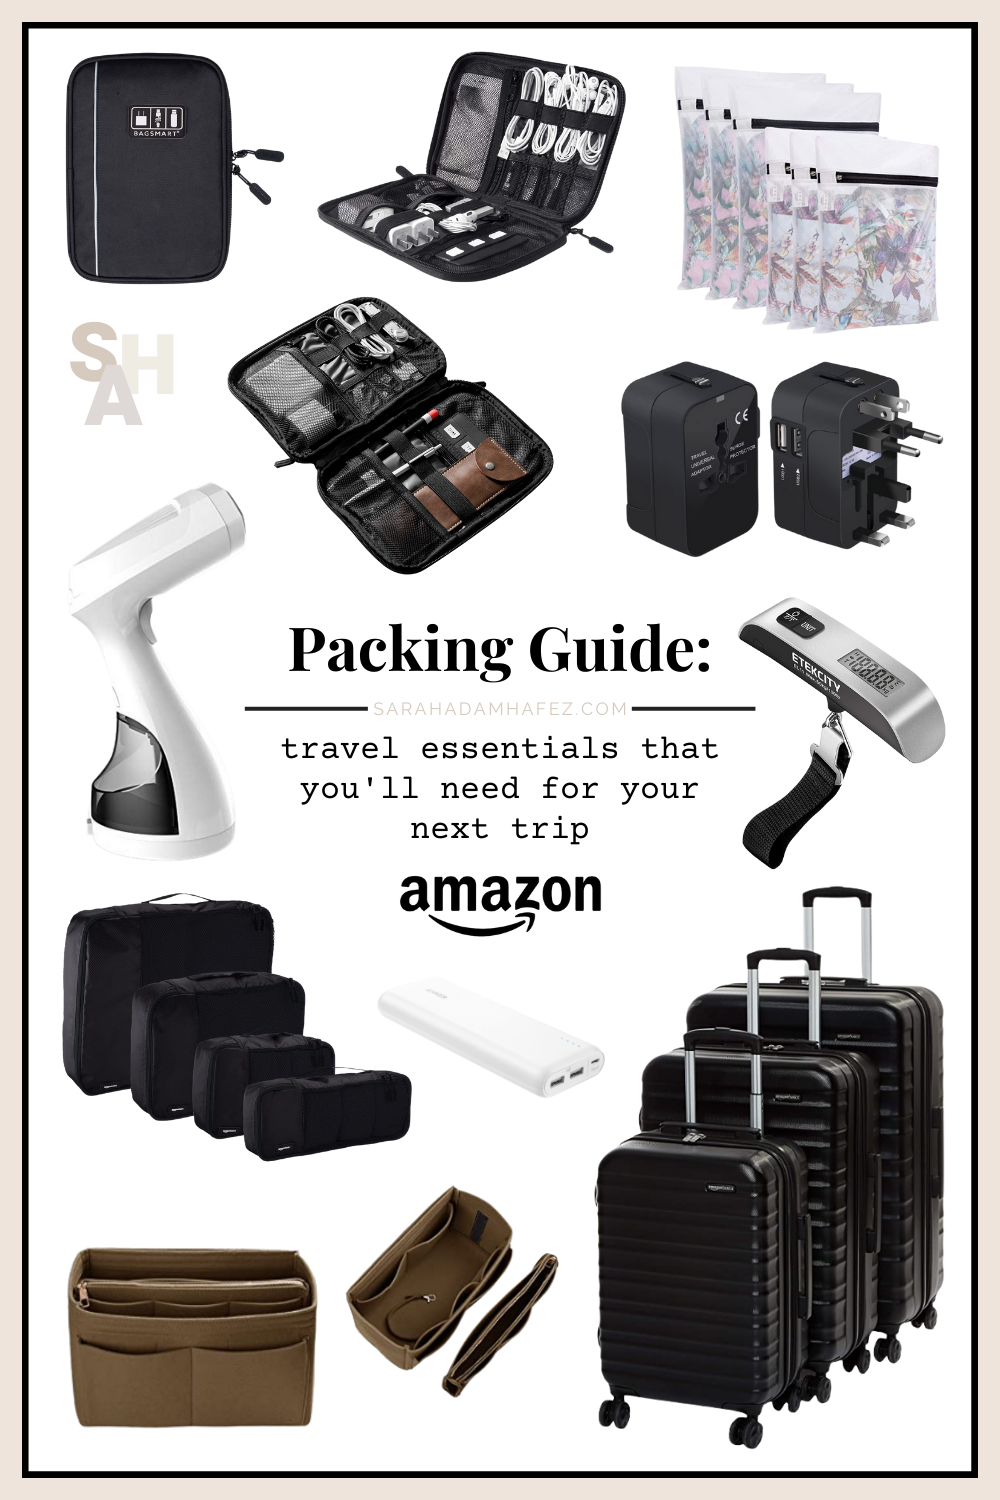 amazon travel essentials, amazon travel, amazon travel findsamazon travel must haves, 